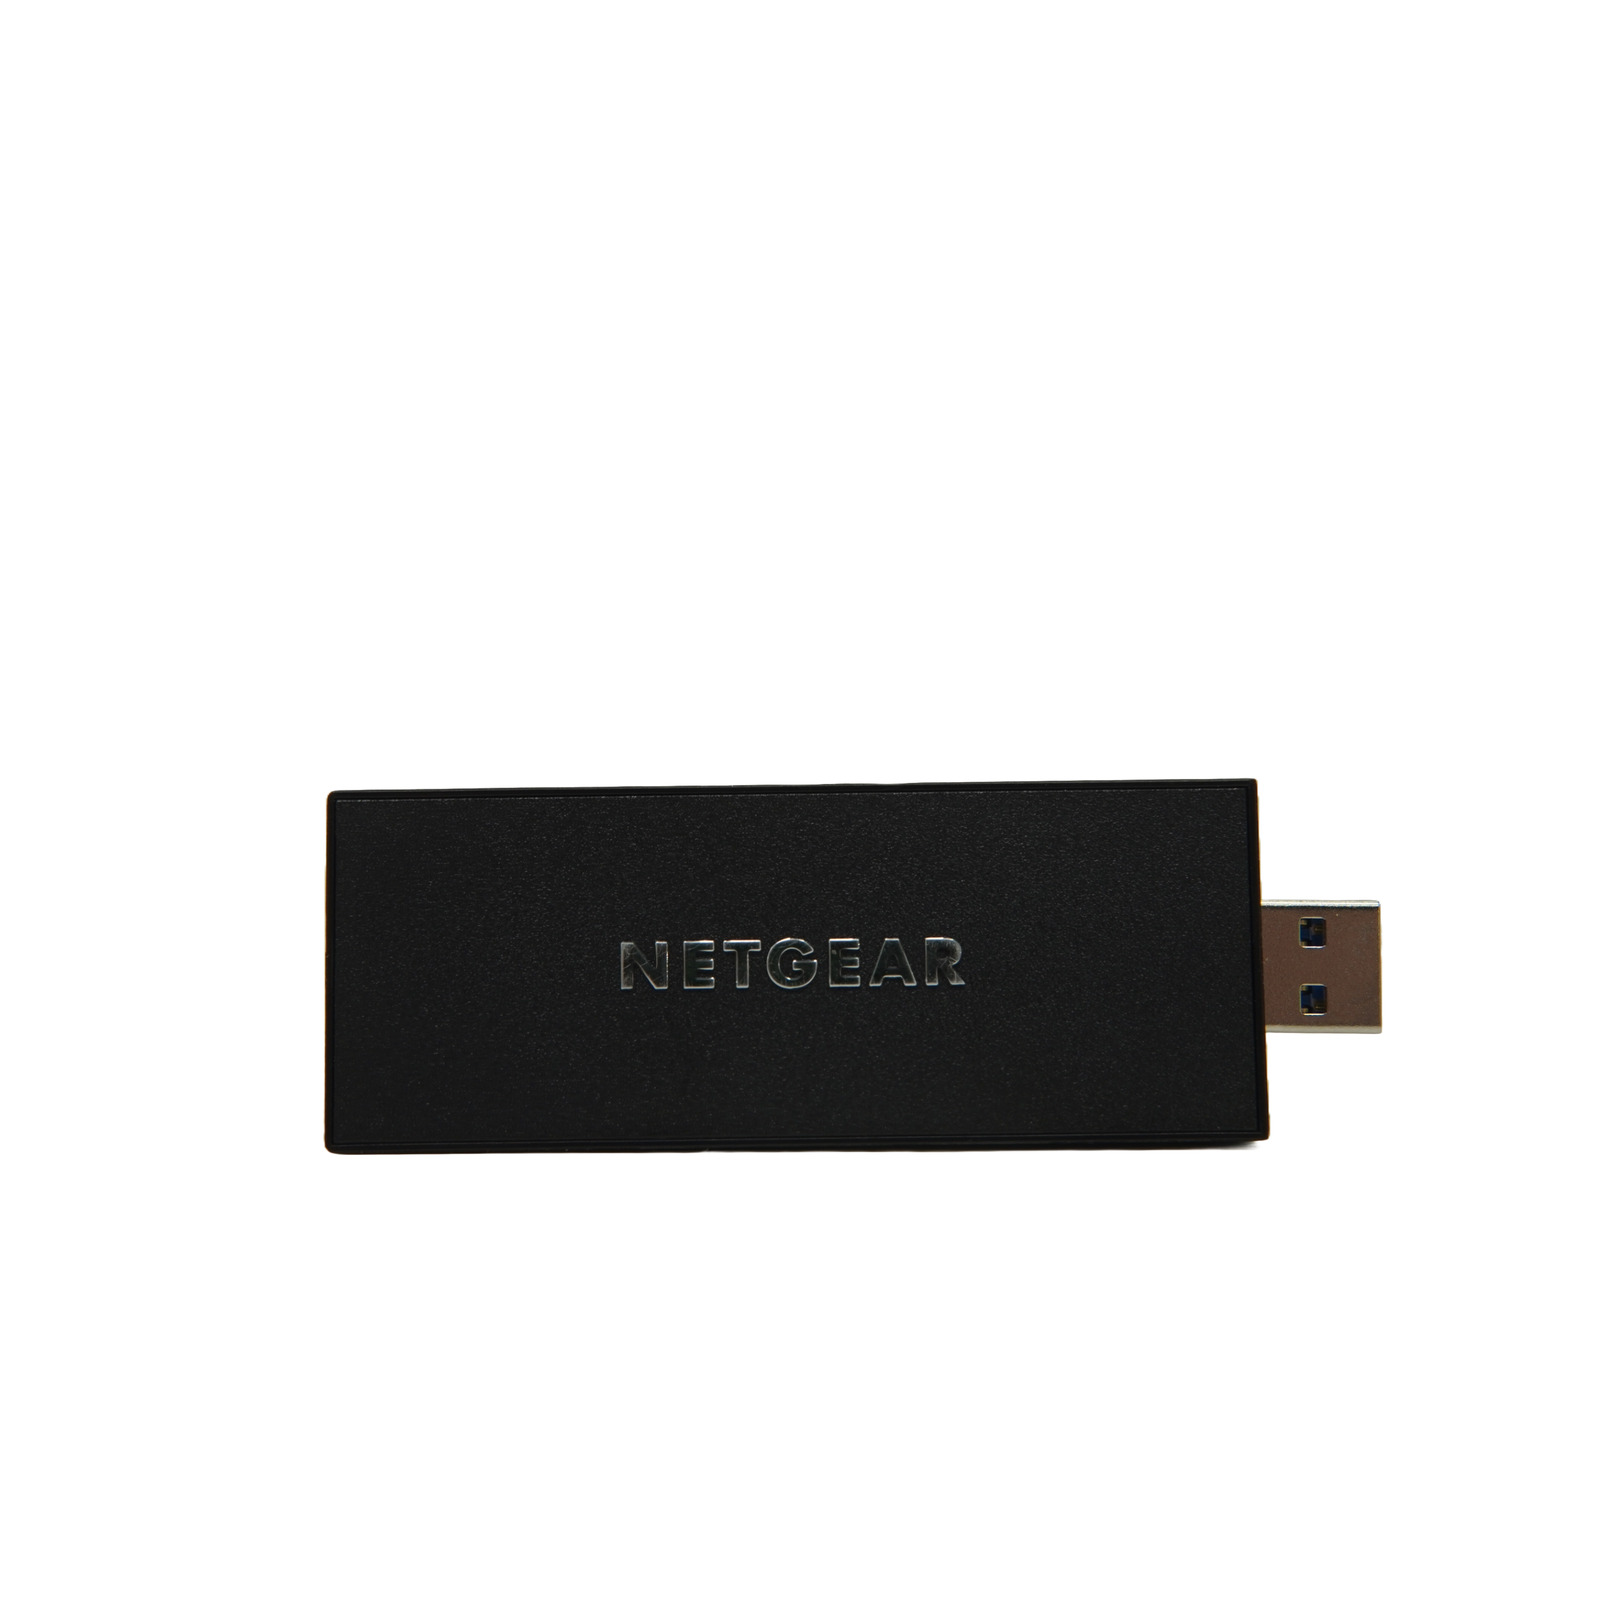 NETGEAR  - Nighthawk AXE3000 Tri-Band Wi-Fi 6E USB 3.0 Adapter - Black